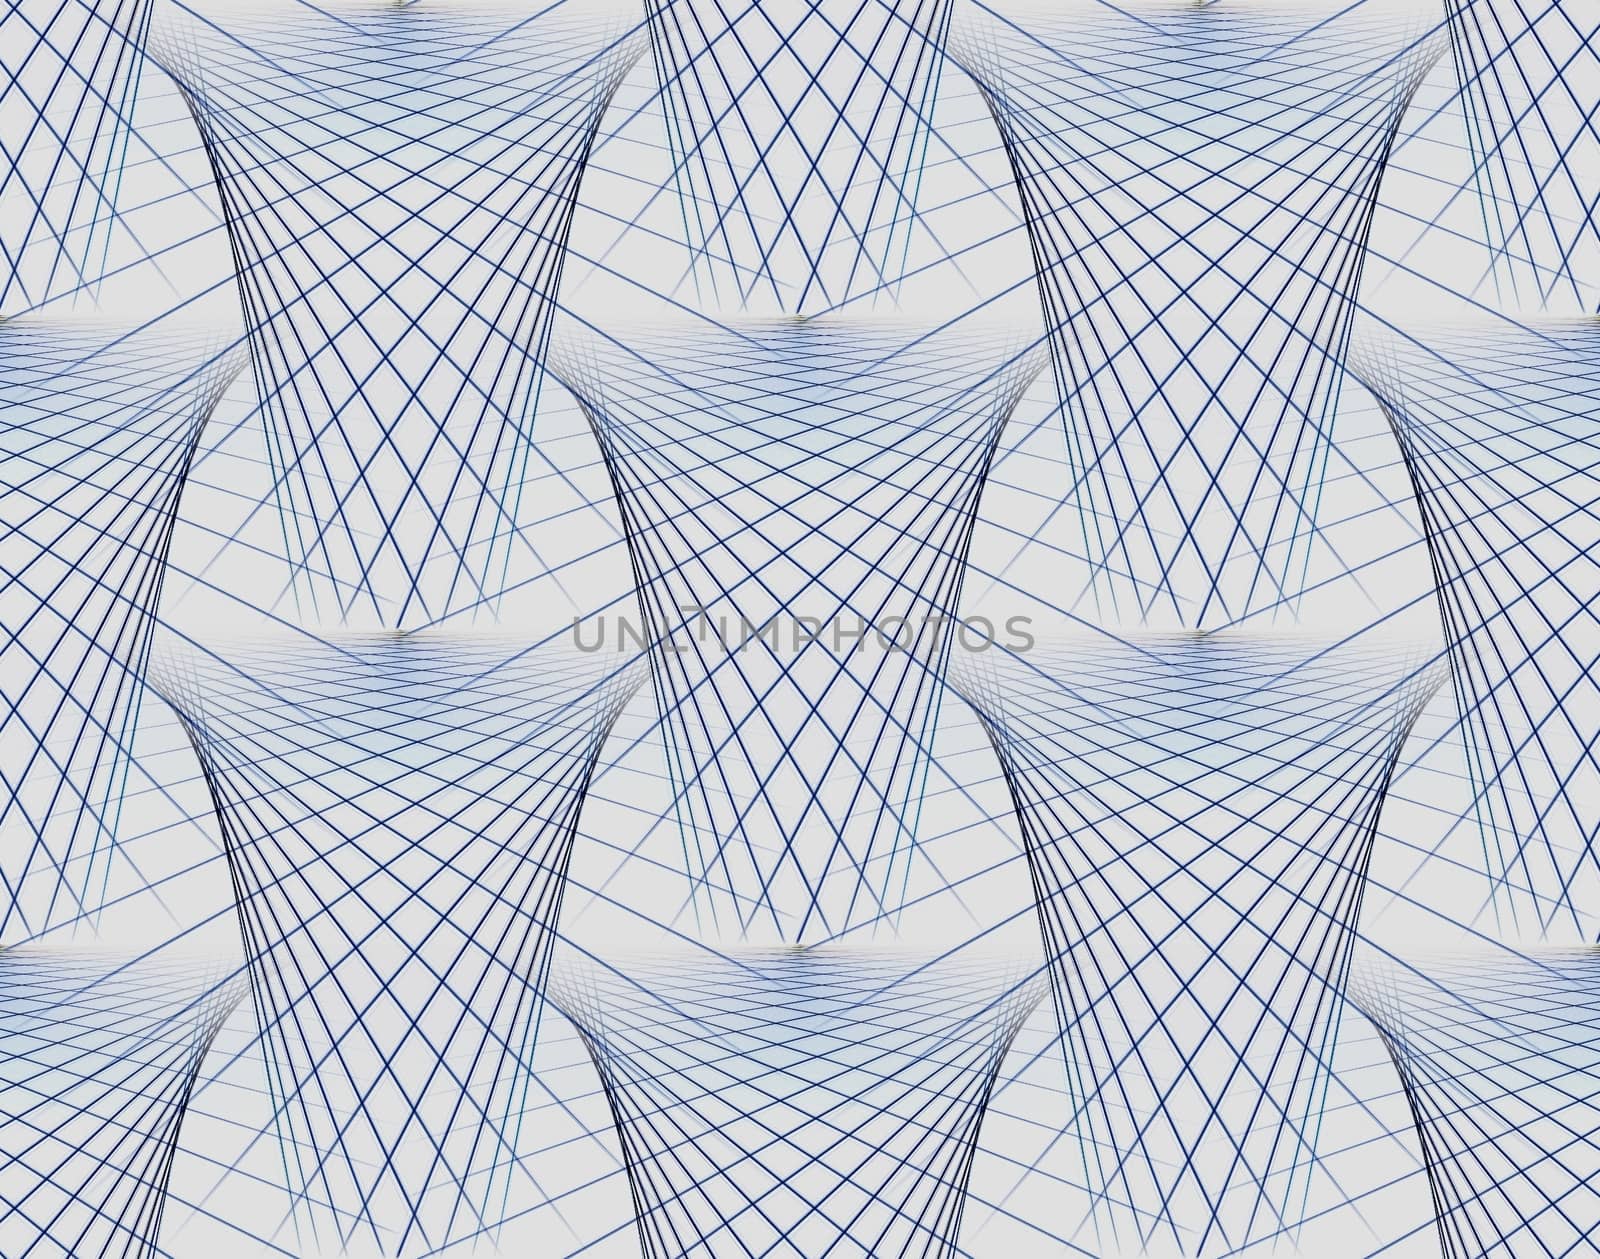 Tiled Geometric Pattern by shiyali